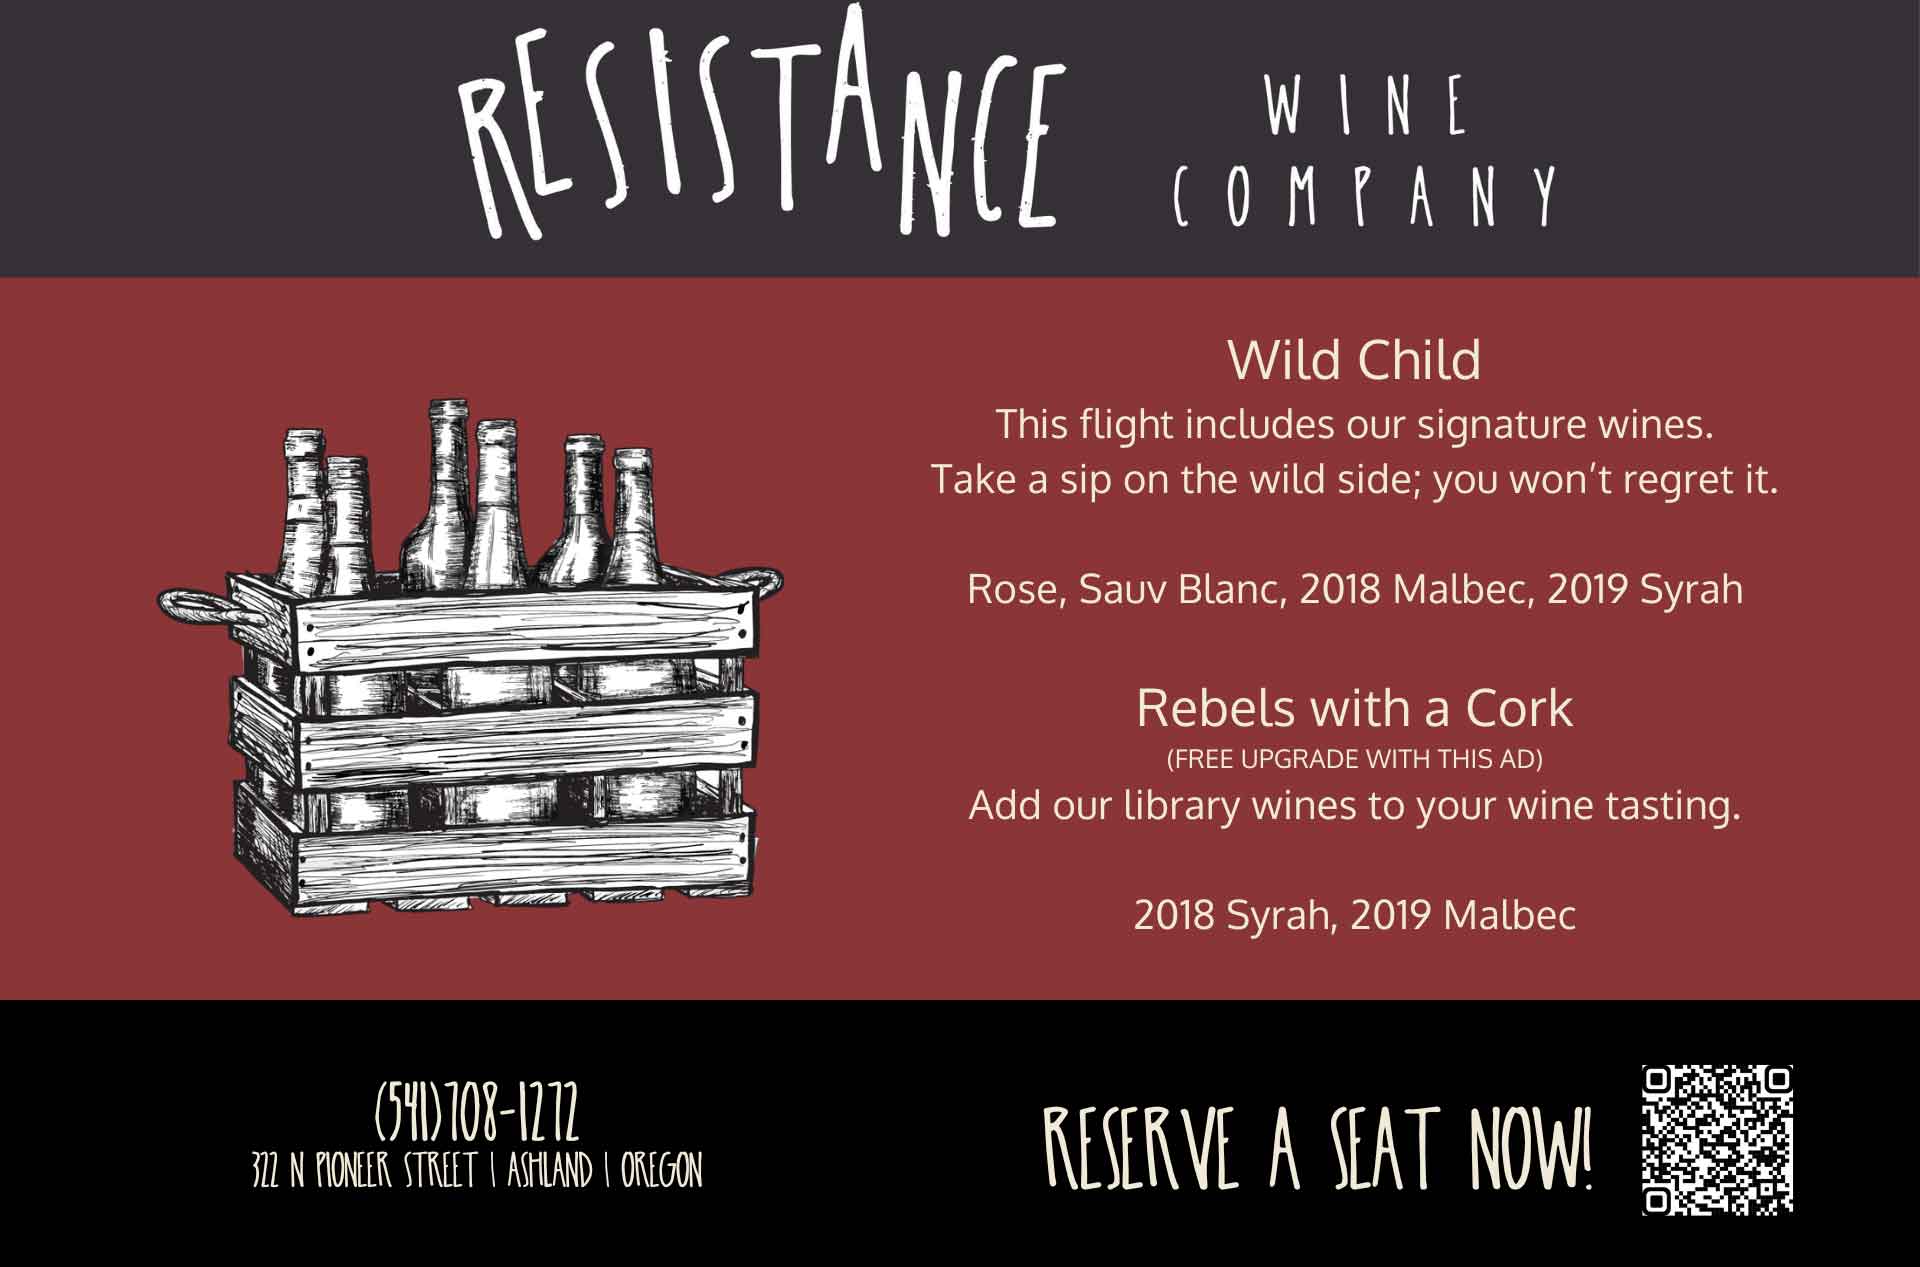 Resistance Wine Company